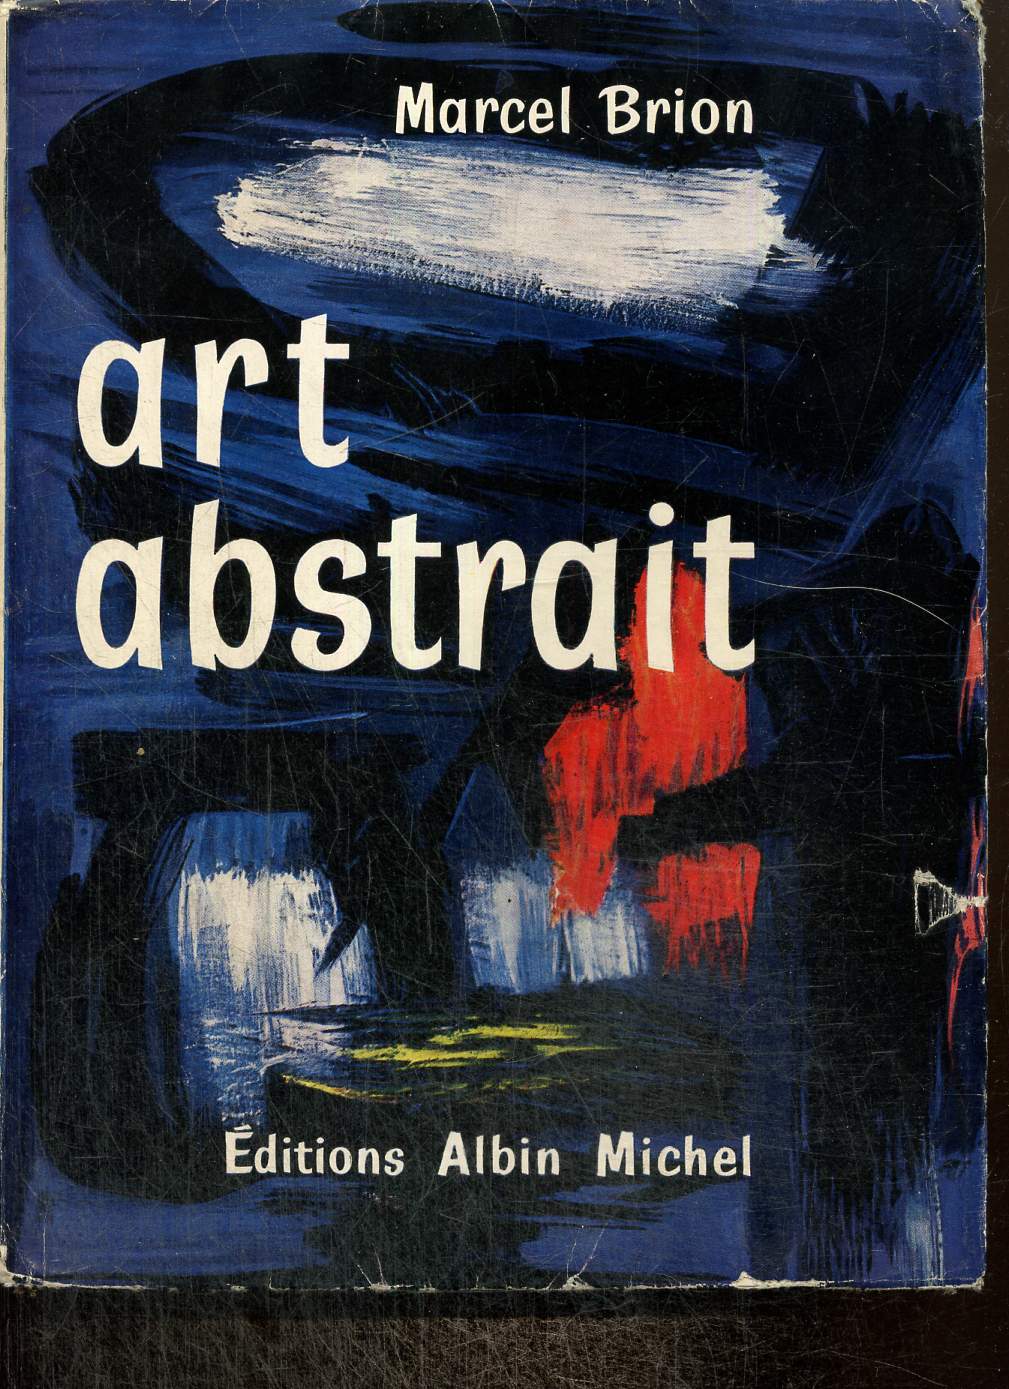 Art abstrait